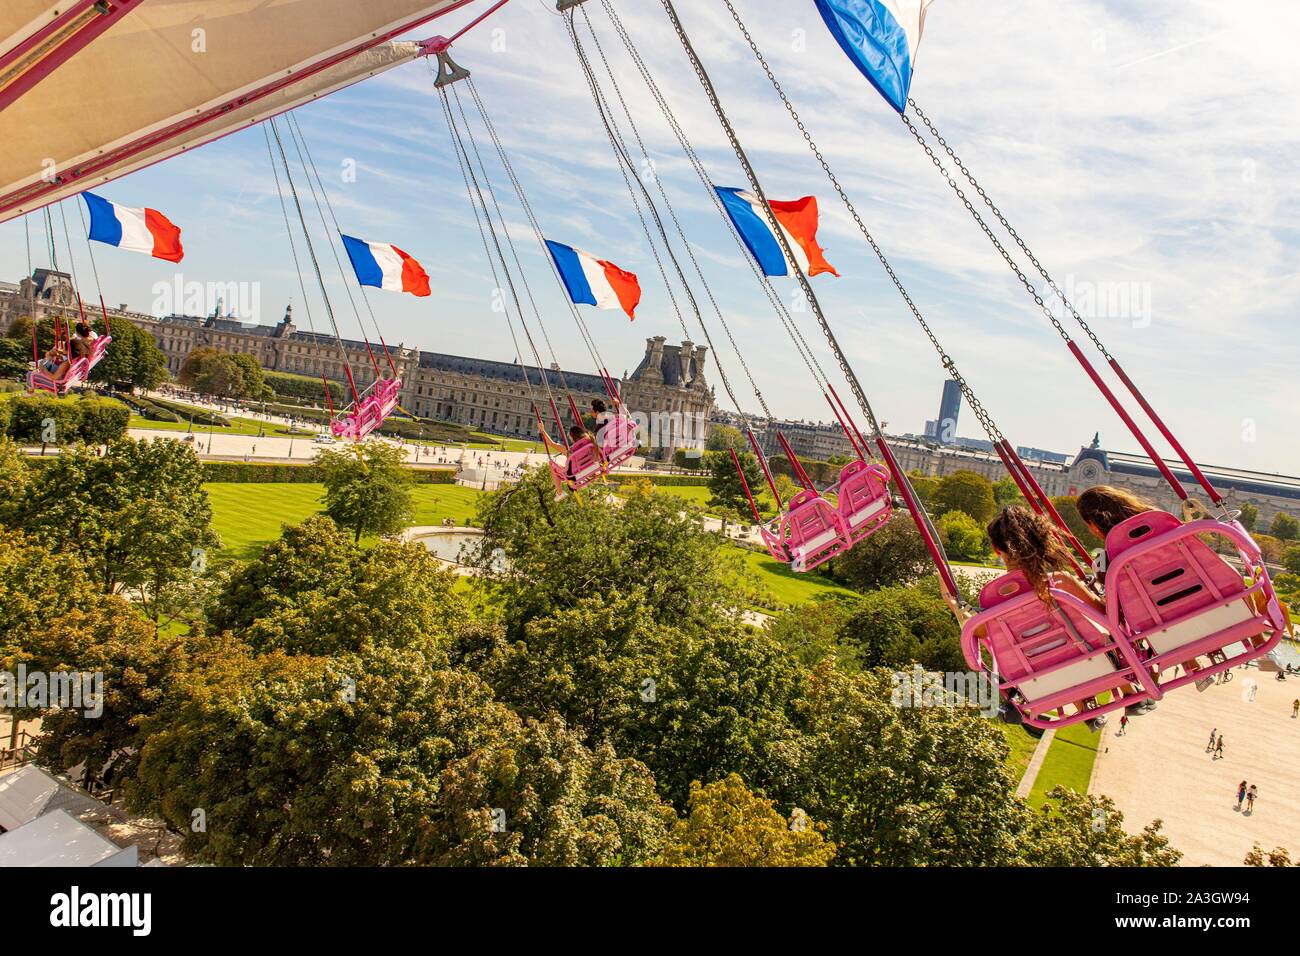 France, Paris, riding fair at the Tuileries Garden Fair Stock Photo